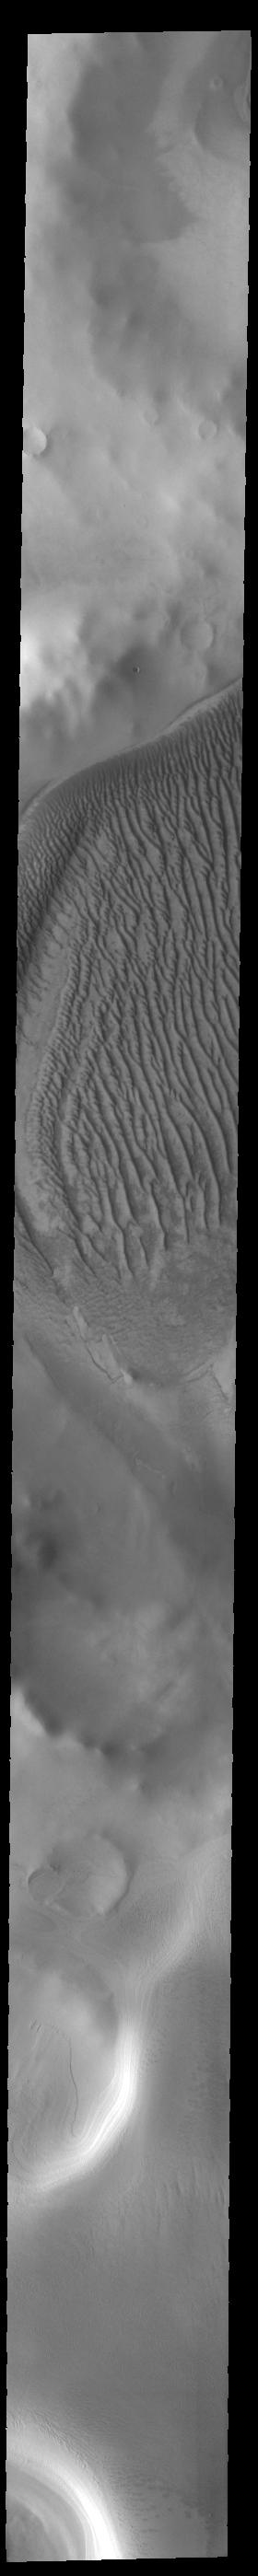 PIA24399: Richardson Crater Dunes